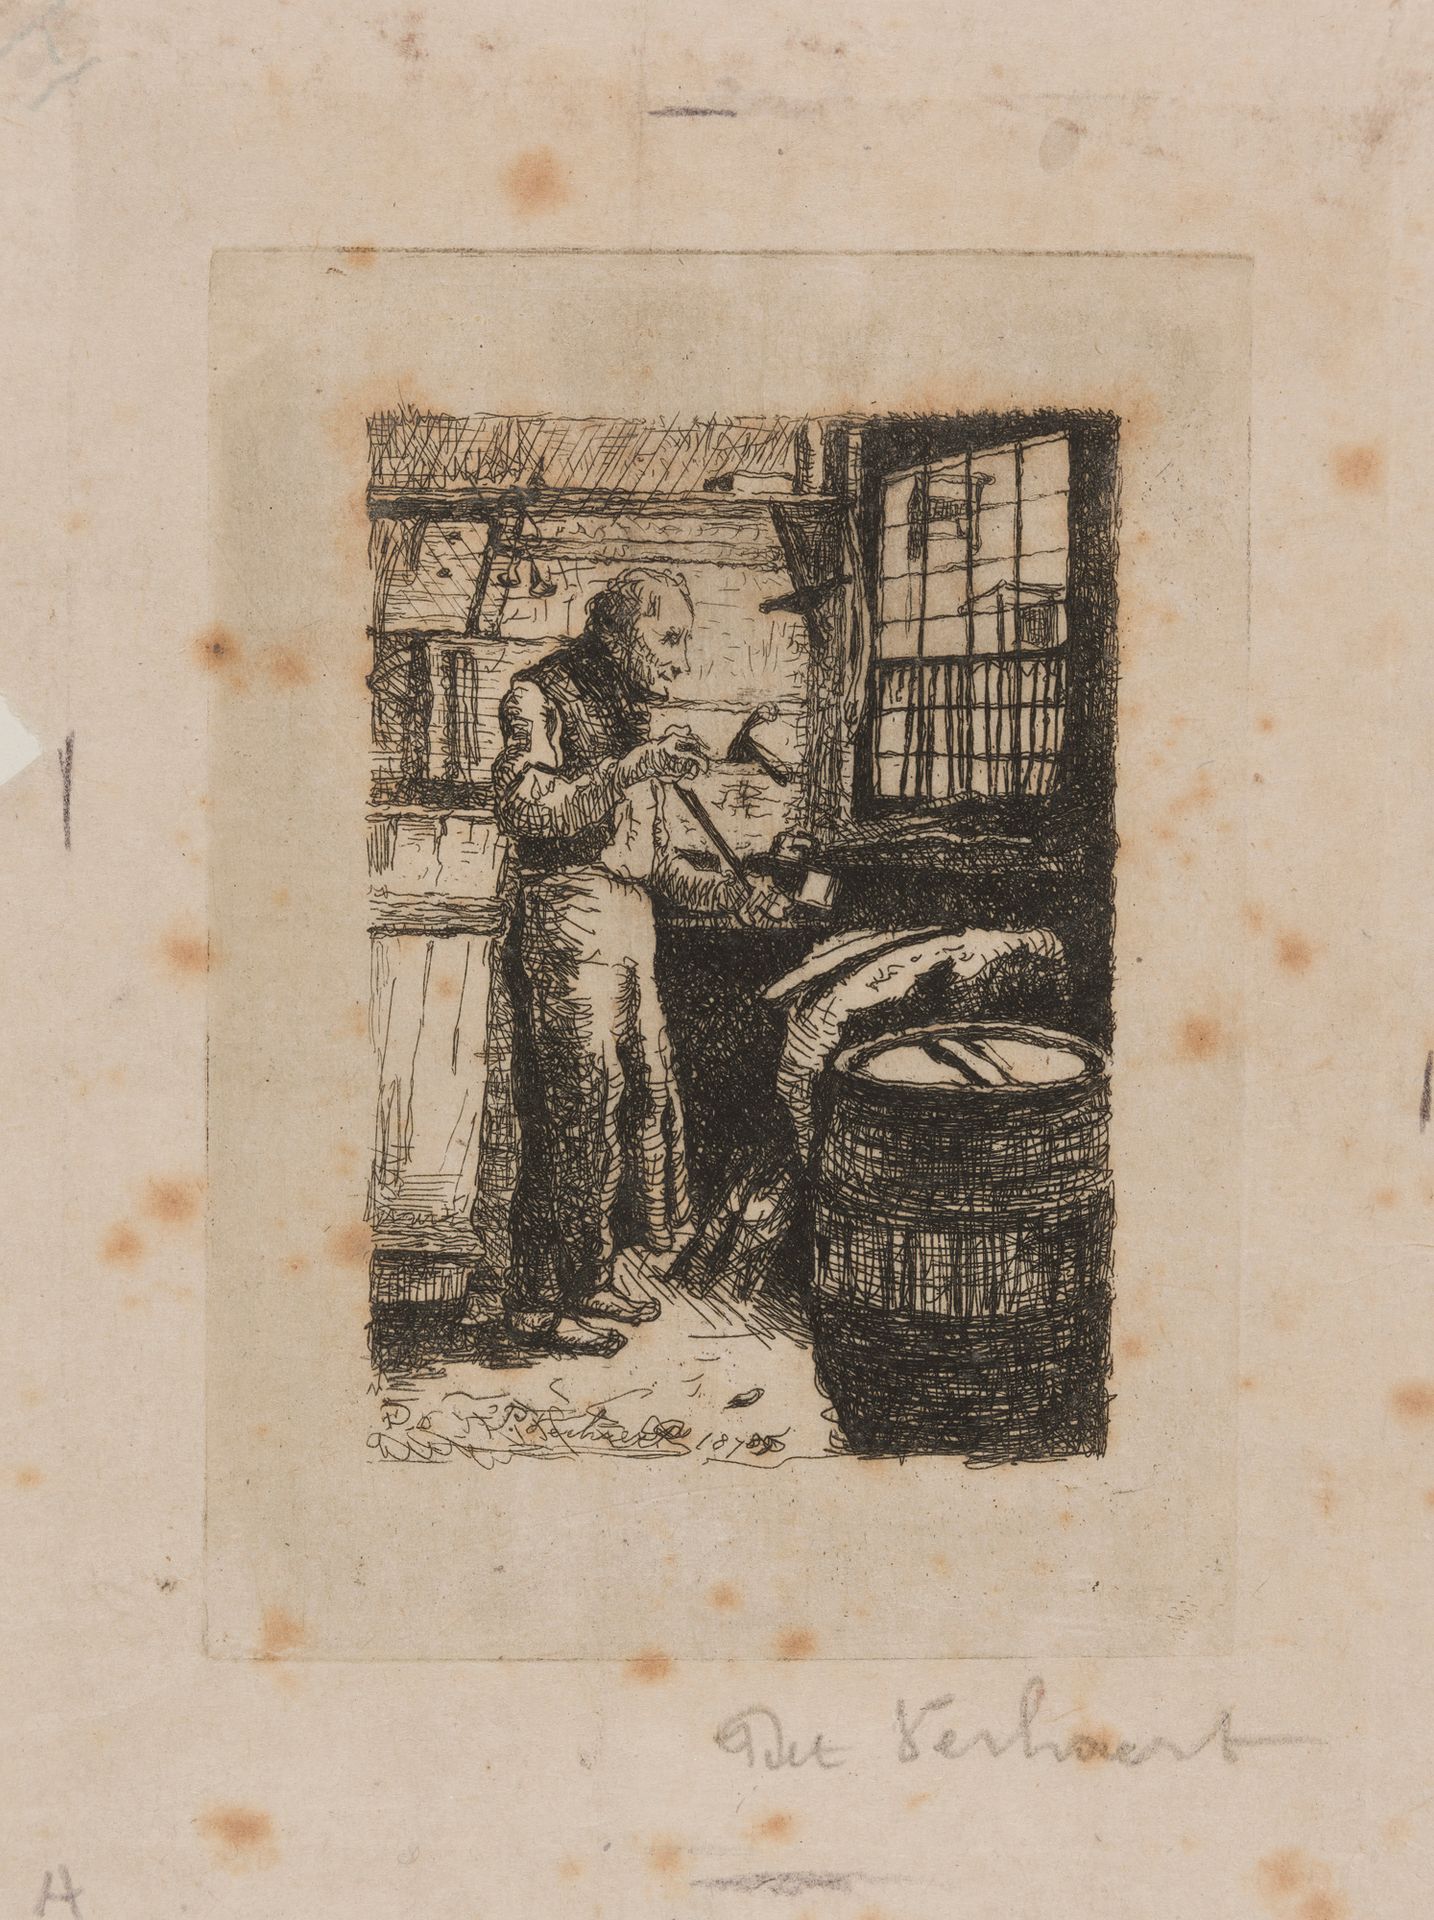 ¨PIET VERHAERT (1852-1908) "品酒师"。蚀刻。右下方有铅笔签名。15 x 11.6厘米（纸） 10.8 x 8厘米（图像）
-
"Wi&hellip;